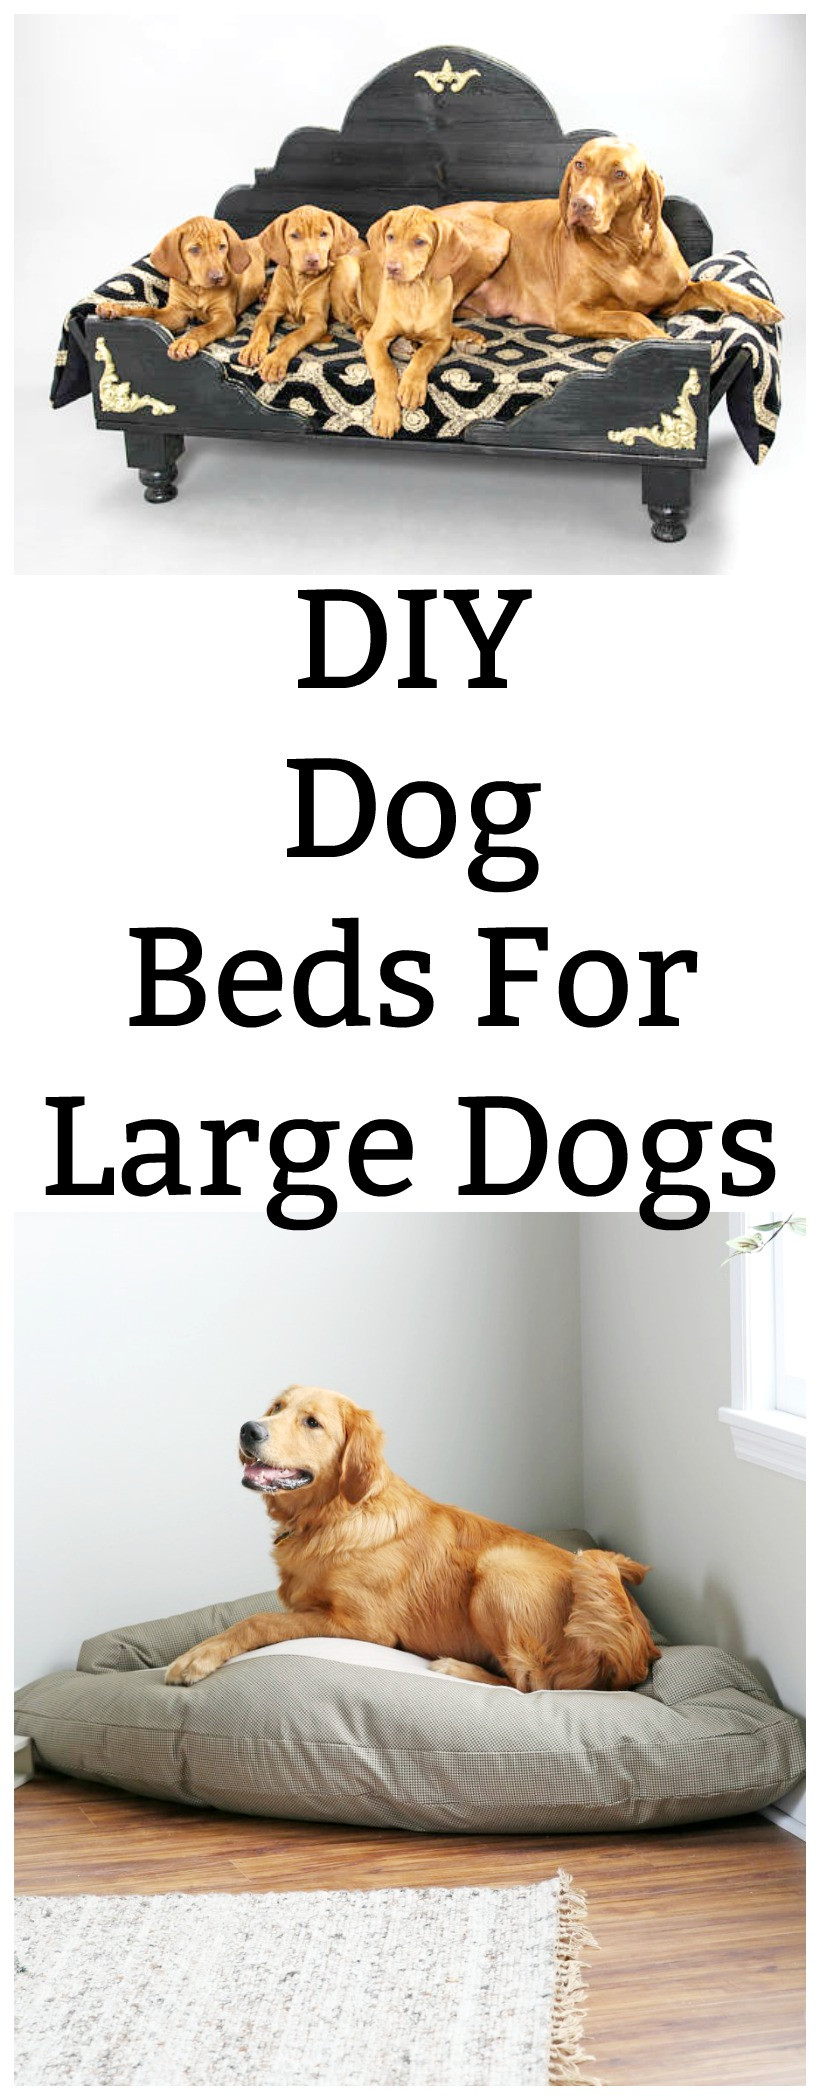 DIY Dog Bed For Big Dogs
 DIY Dog Beds for Dogs Chemistry Cachet